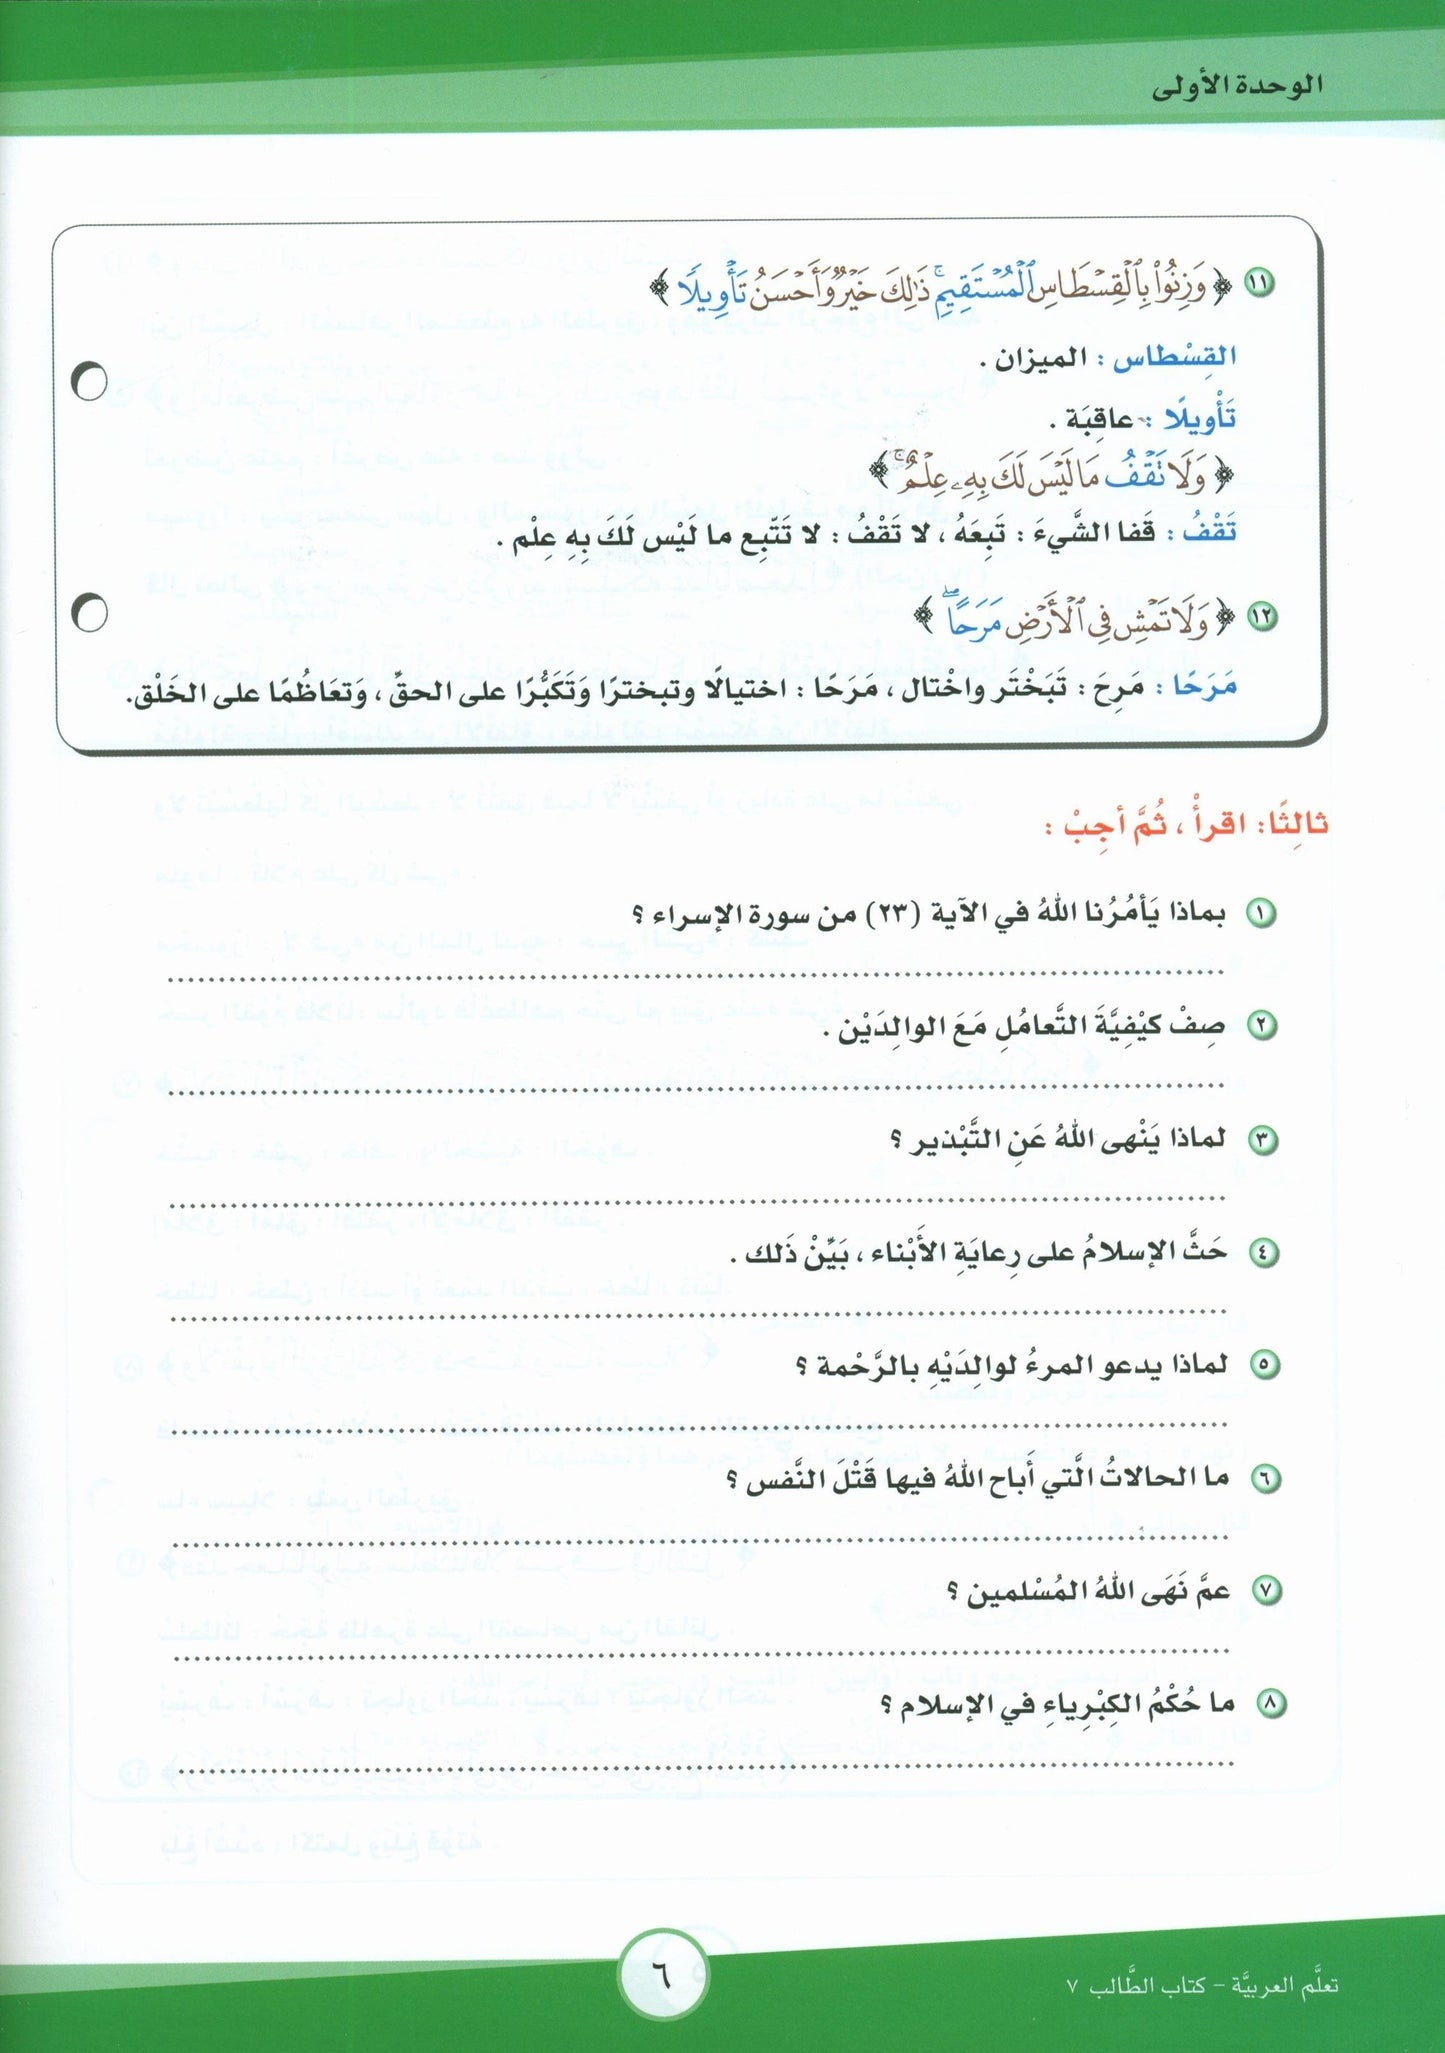 ICO Learn Arabic - Workbook - Level 7 Part 1 - تعلم العربية كتاب النشاط